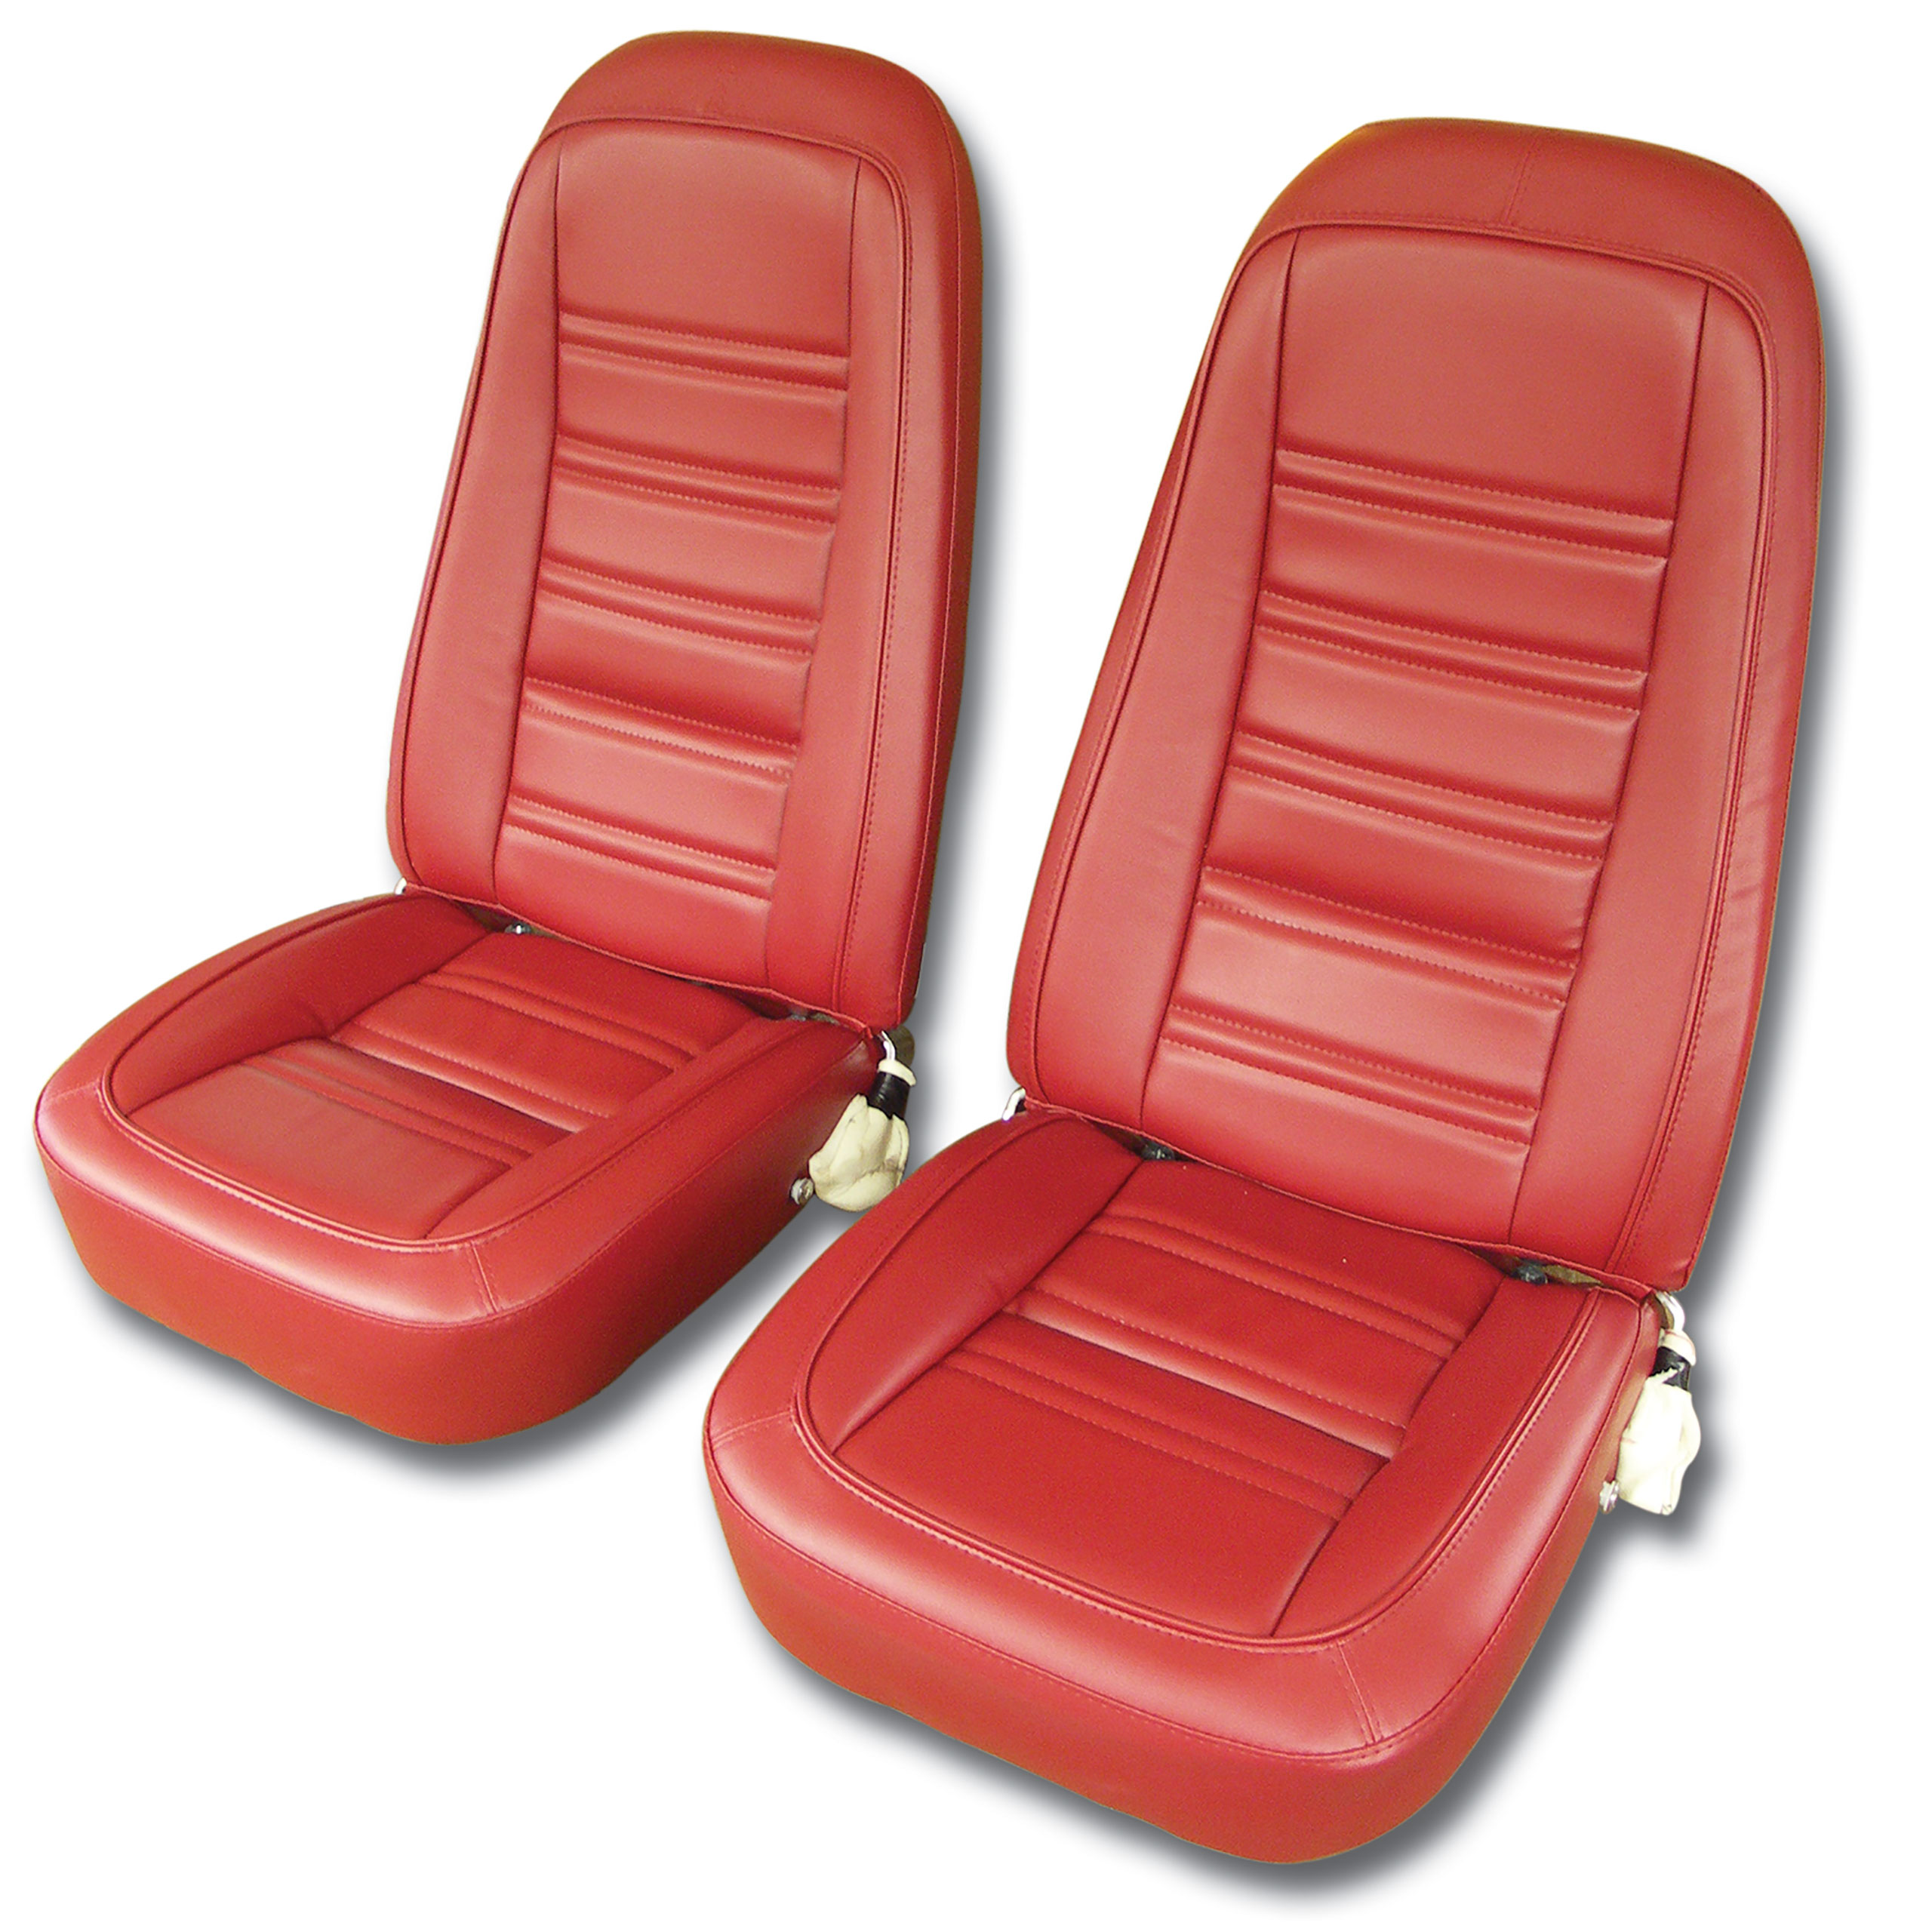 1977-1978 C3 Corvette Mounted Seats Red "Leather-Like" Vinyl